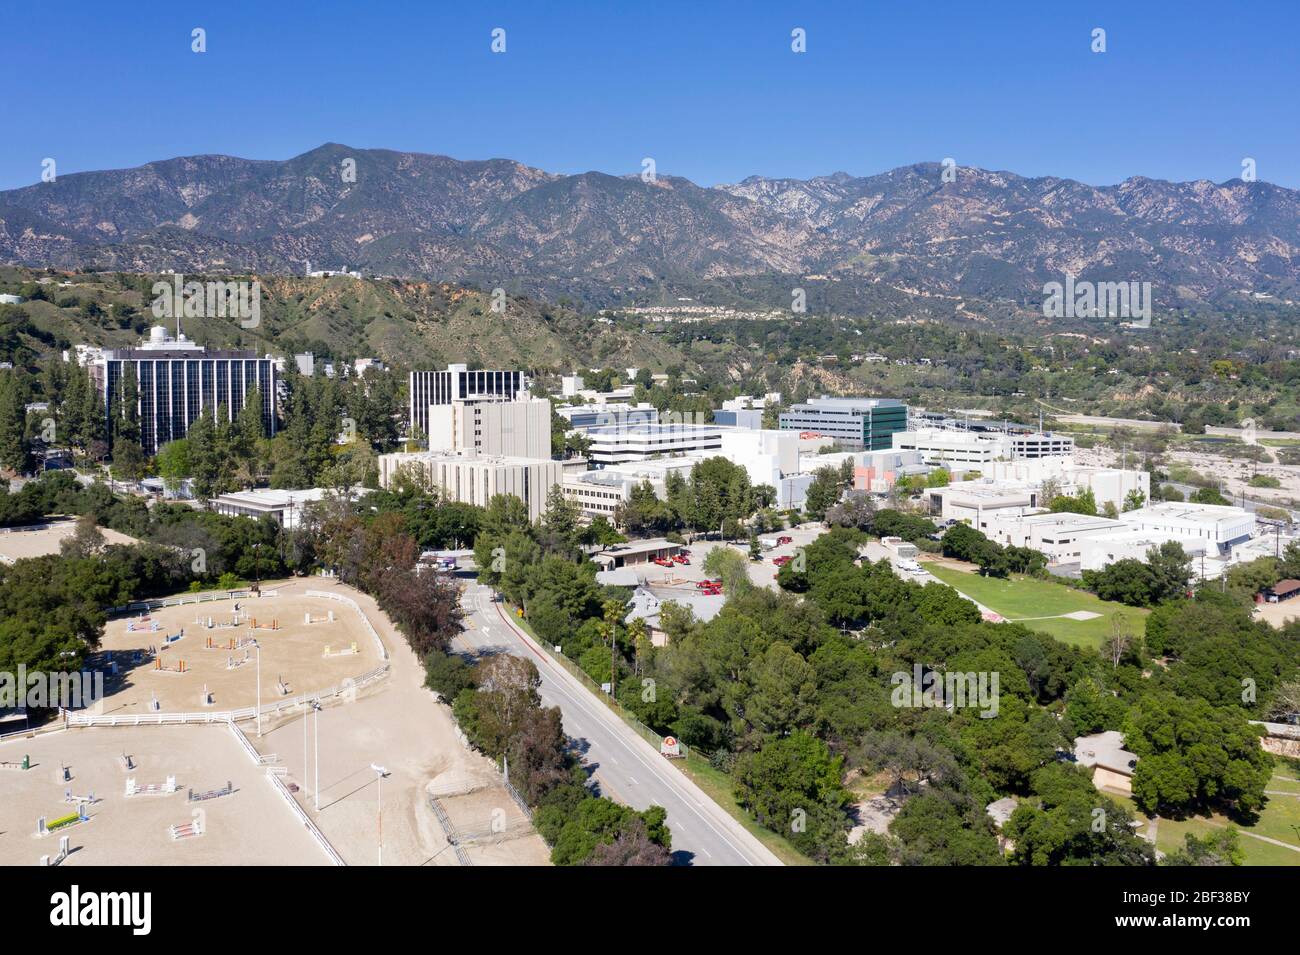 Aerial view of the NASA & Caltech run Jet Propulsion Laboratory (JPL) located in the foothills above Pasadena in La Canada Flintridge, California Stock Photo